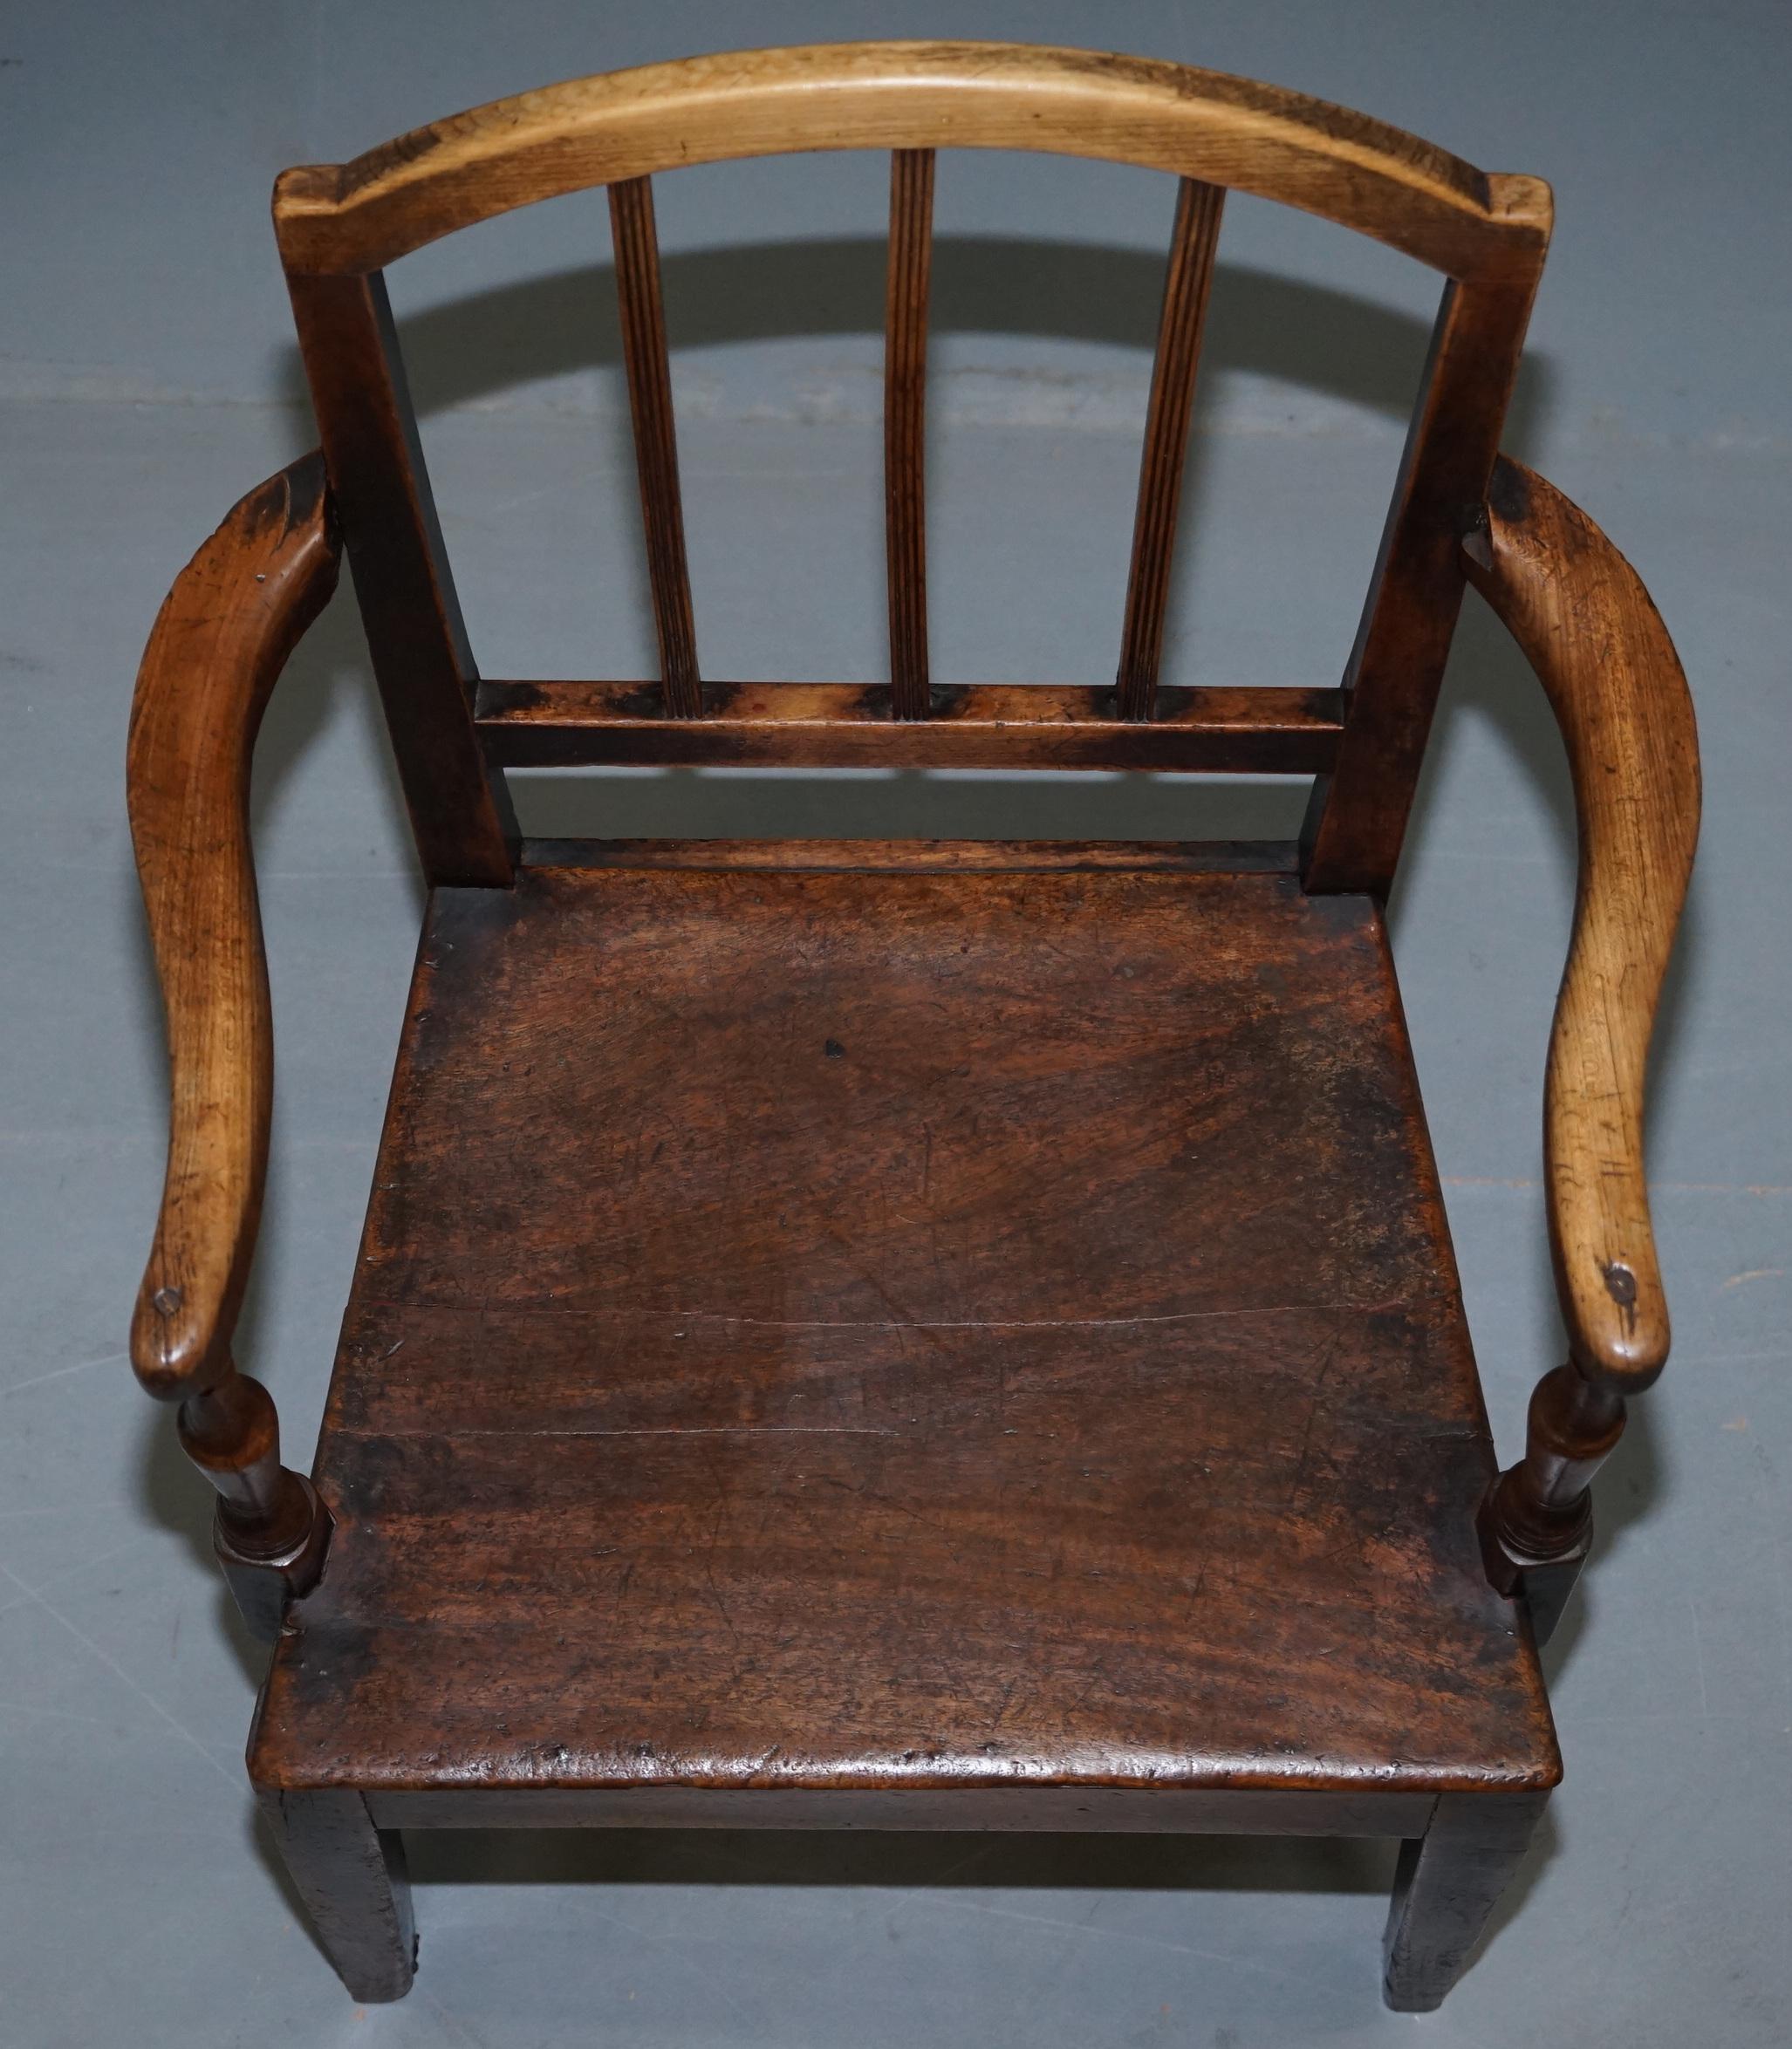 Hand-Crafted Very Rare George II circa 1760 Primitive Carver Armchair Original Period Repairs